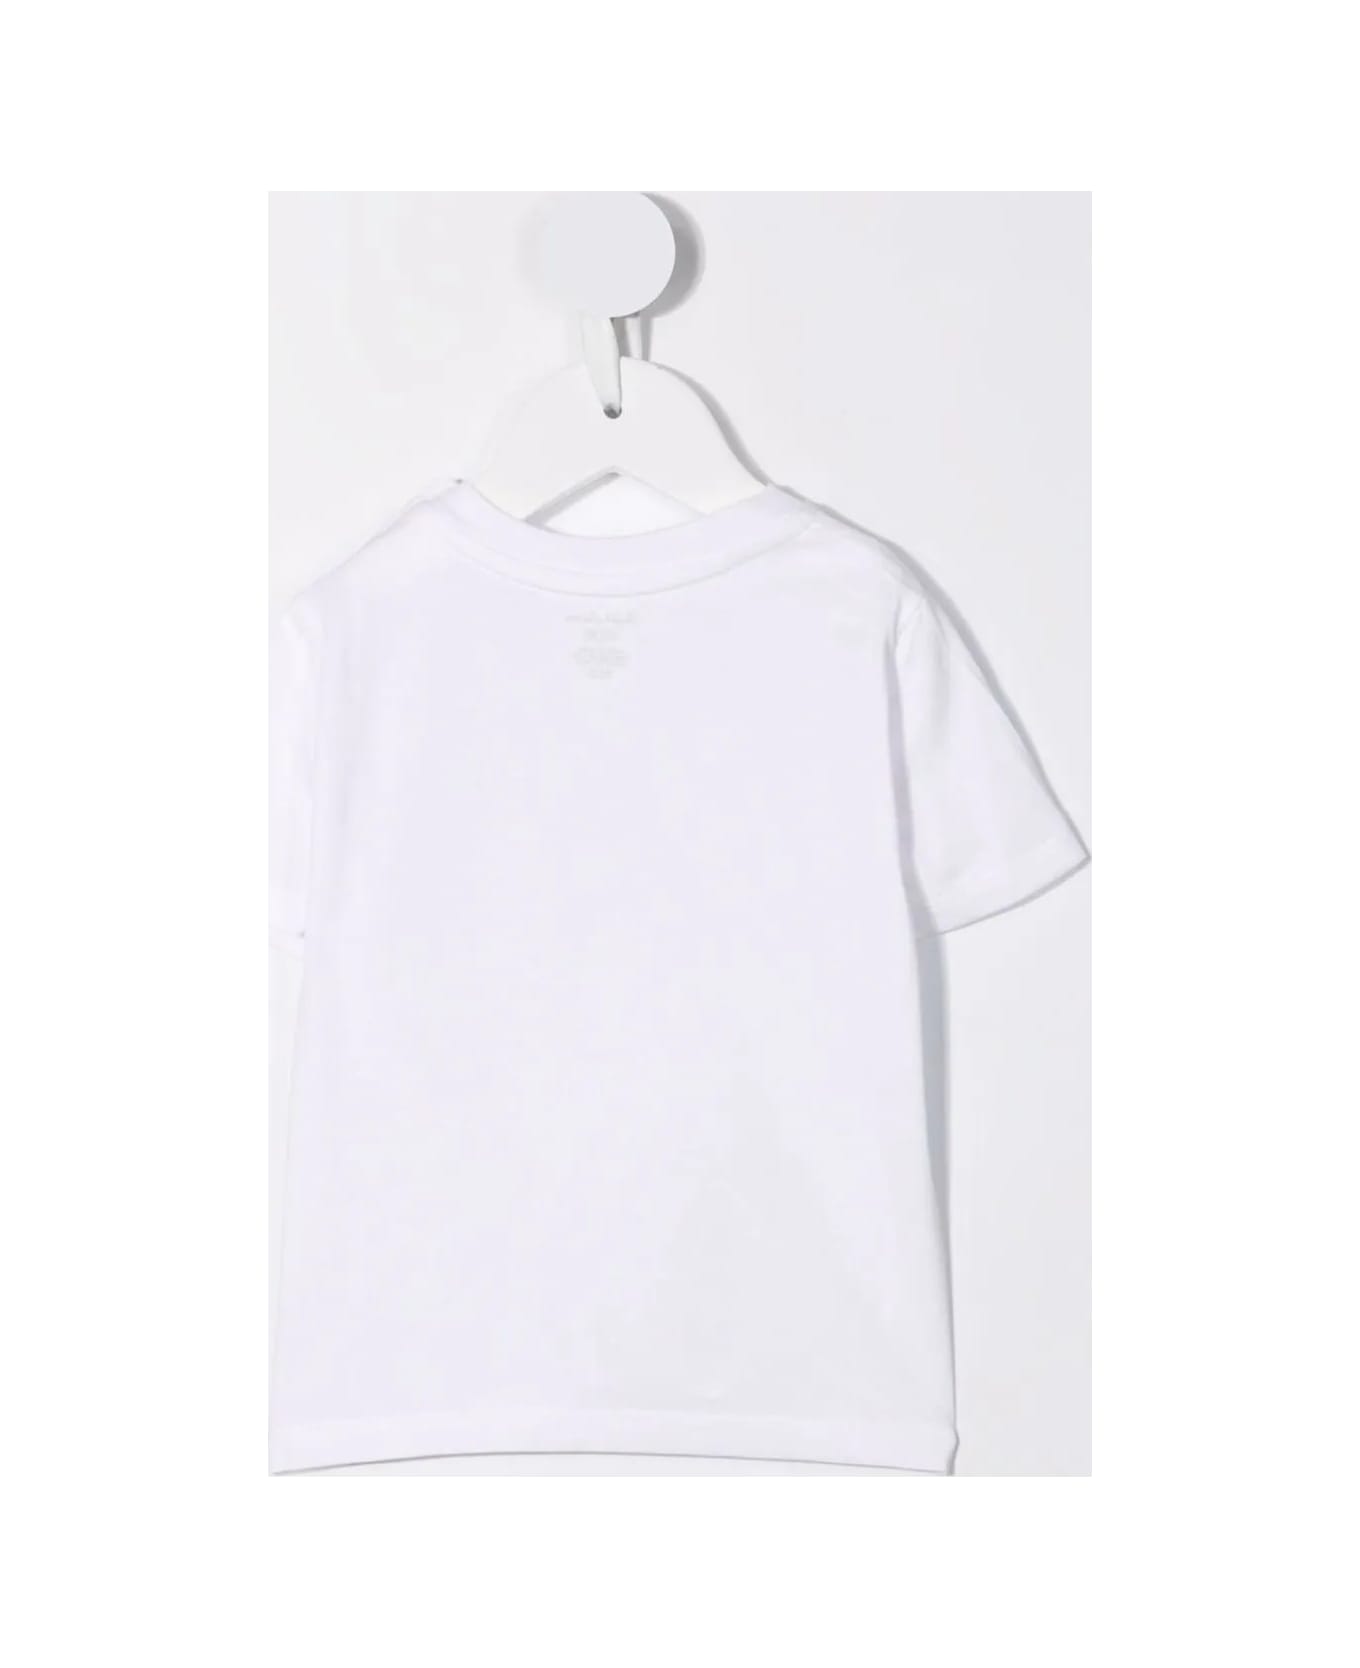 Ralph Lauren White T-shirt With Navy Blue Pony - White